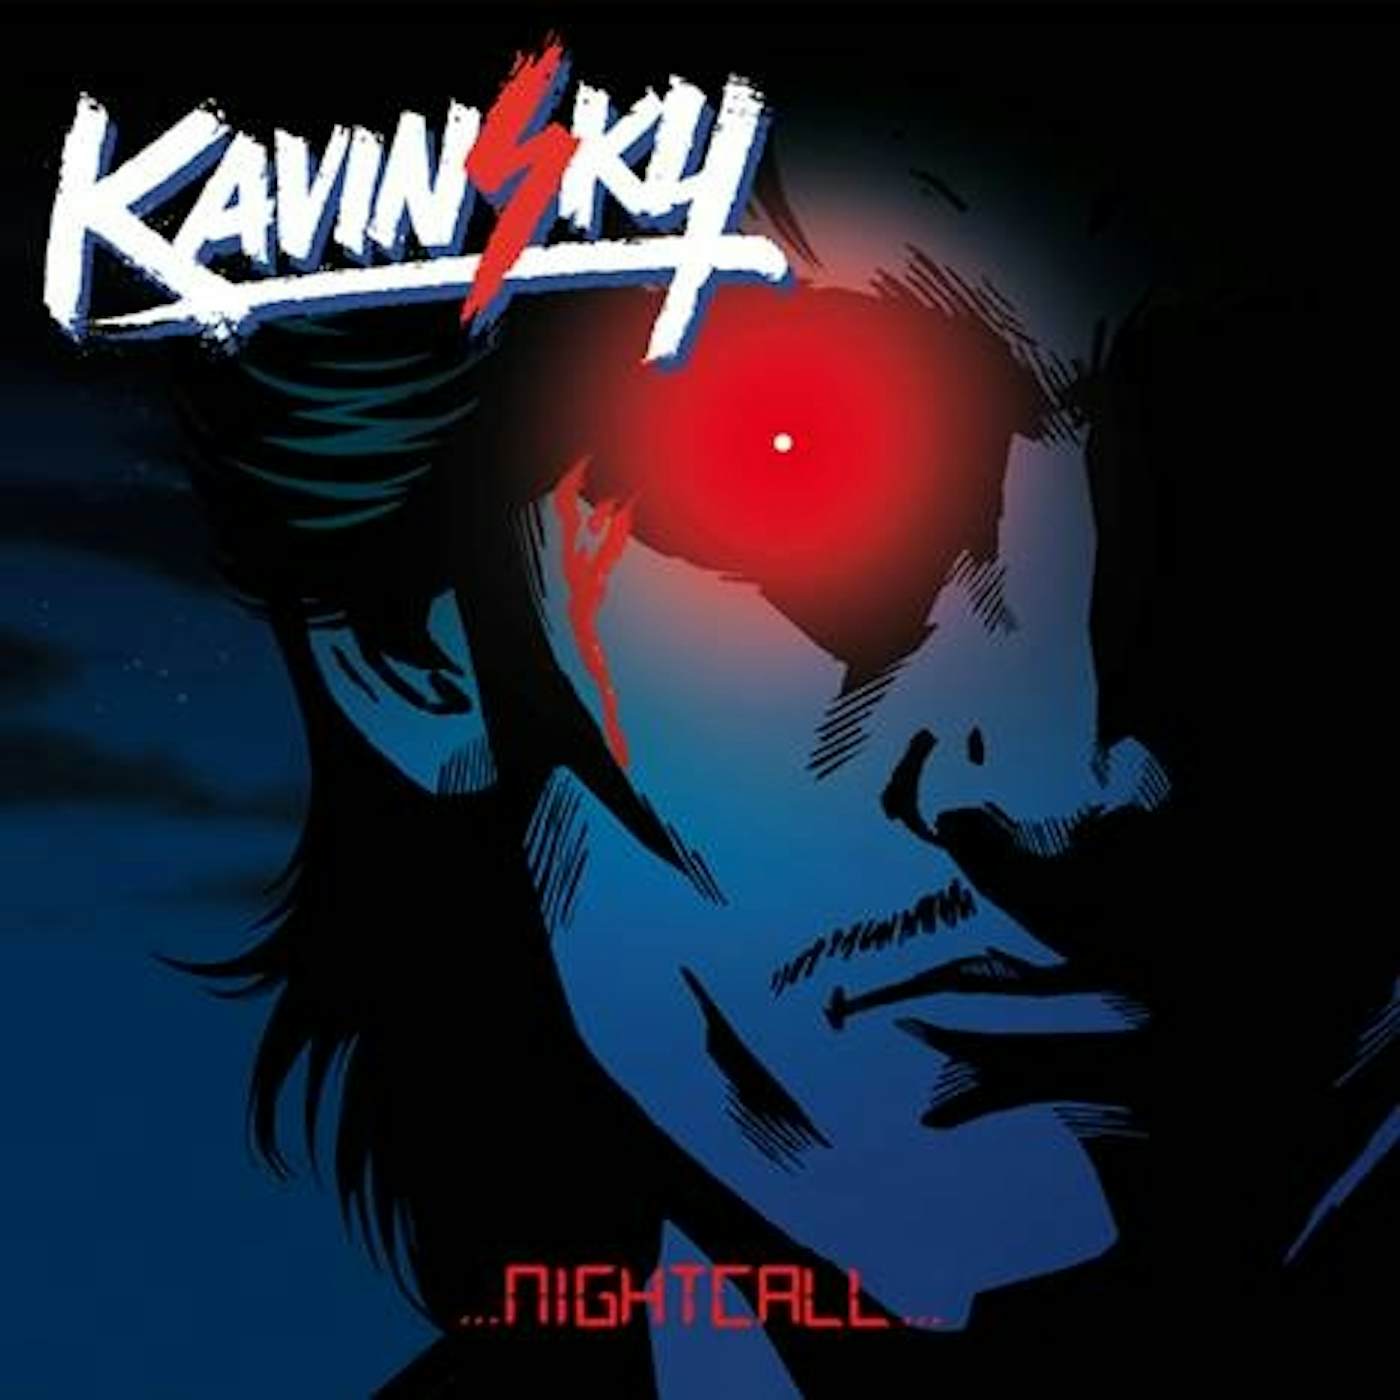 Best New DJ KAVINSKY Nightcall Electro House Classic Gildan T-shirt Size  S-2XL